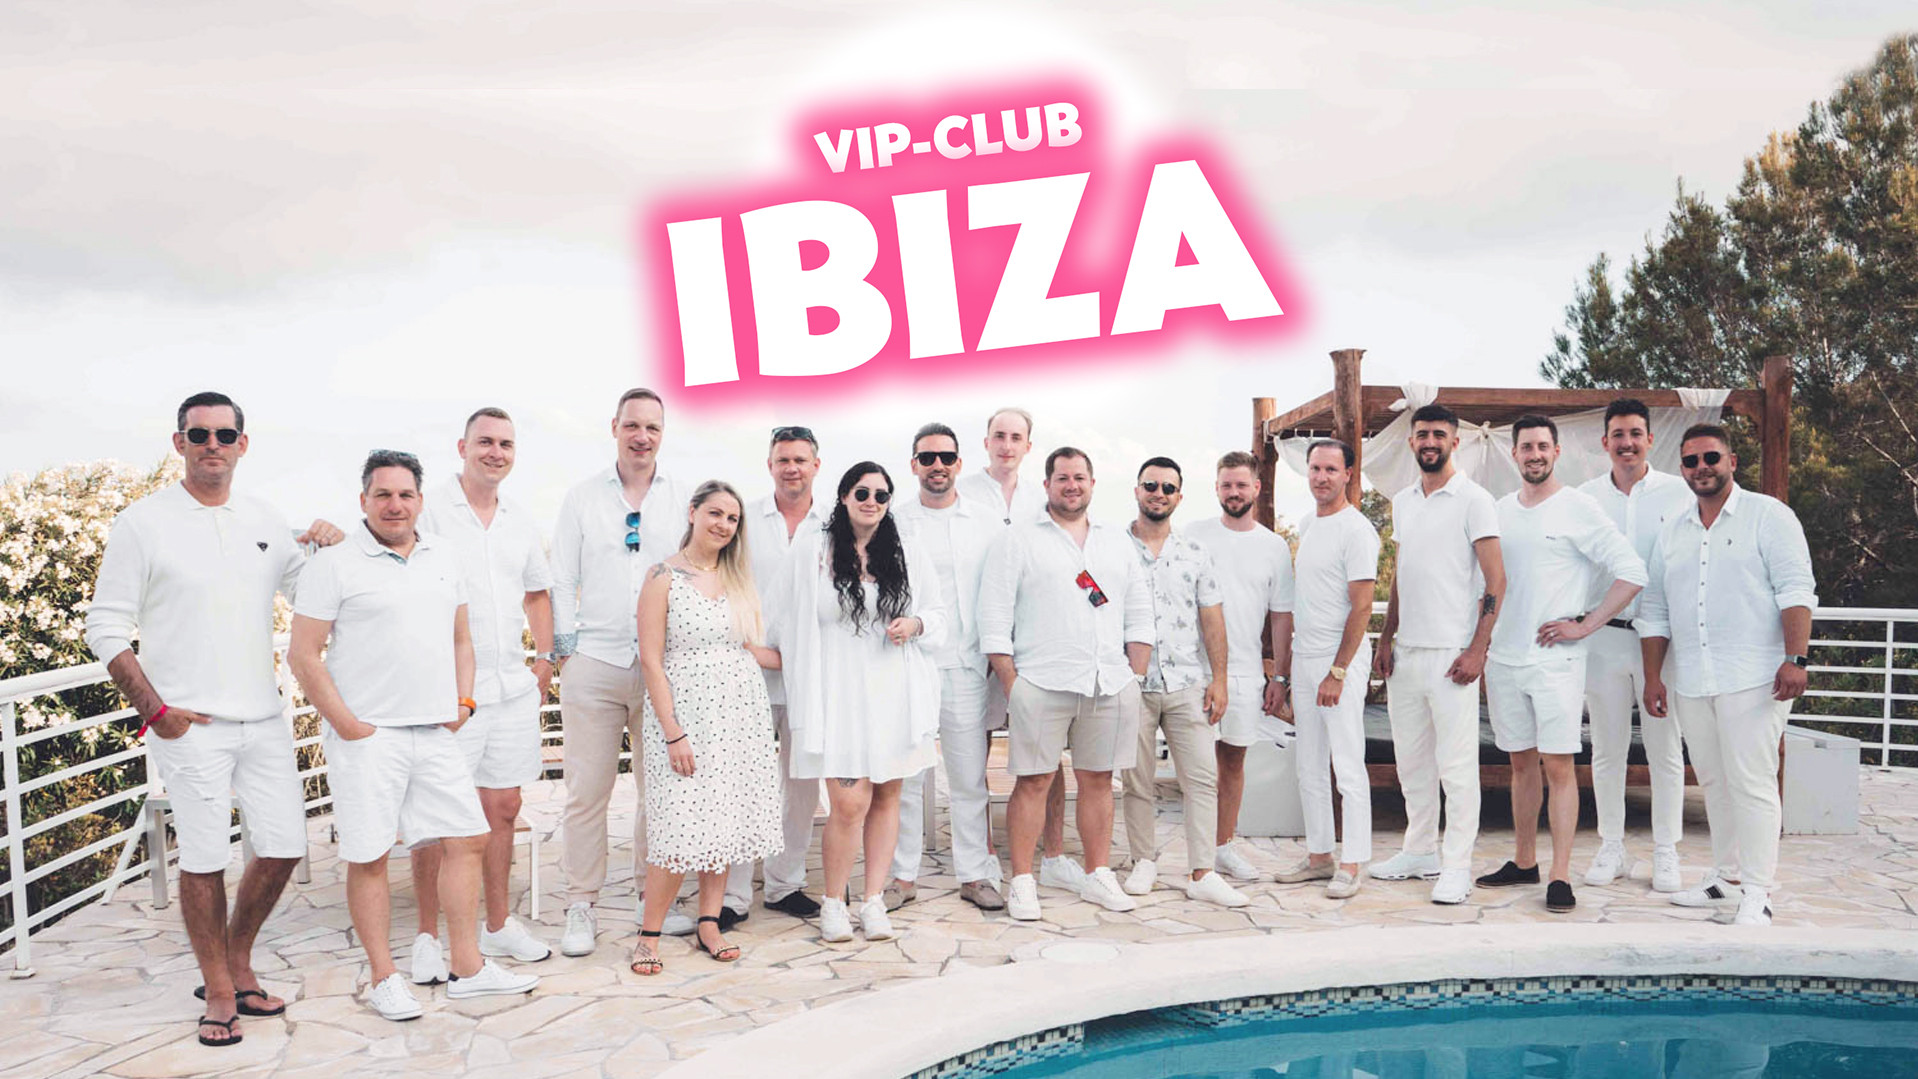 VIP-Club Ibiza